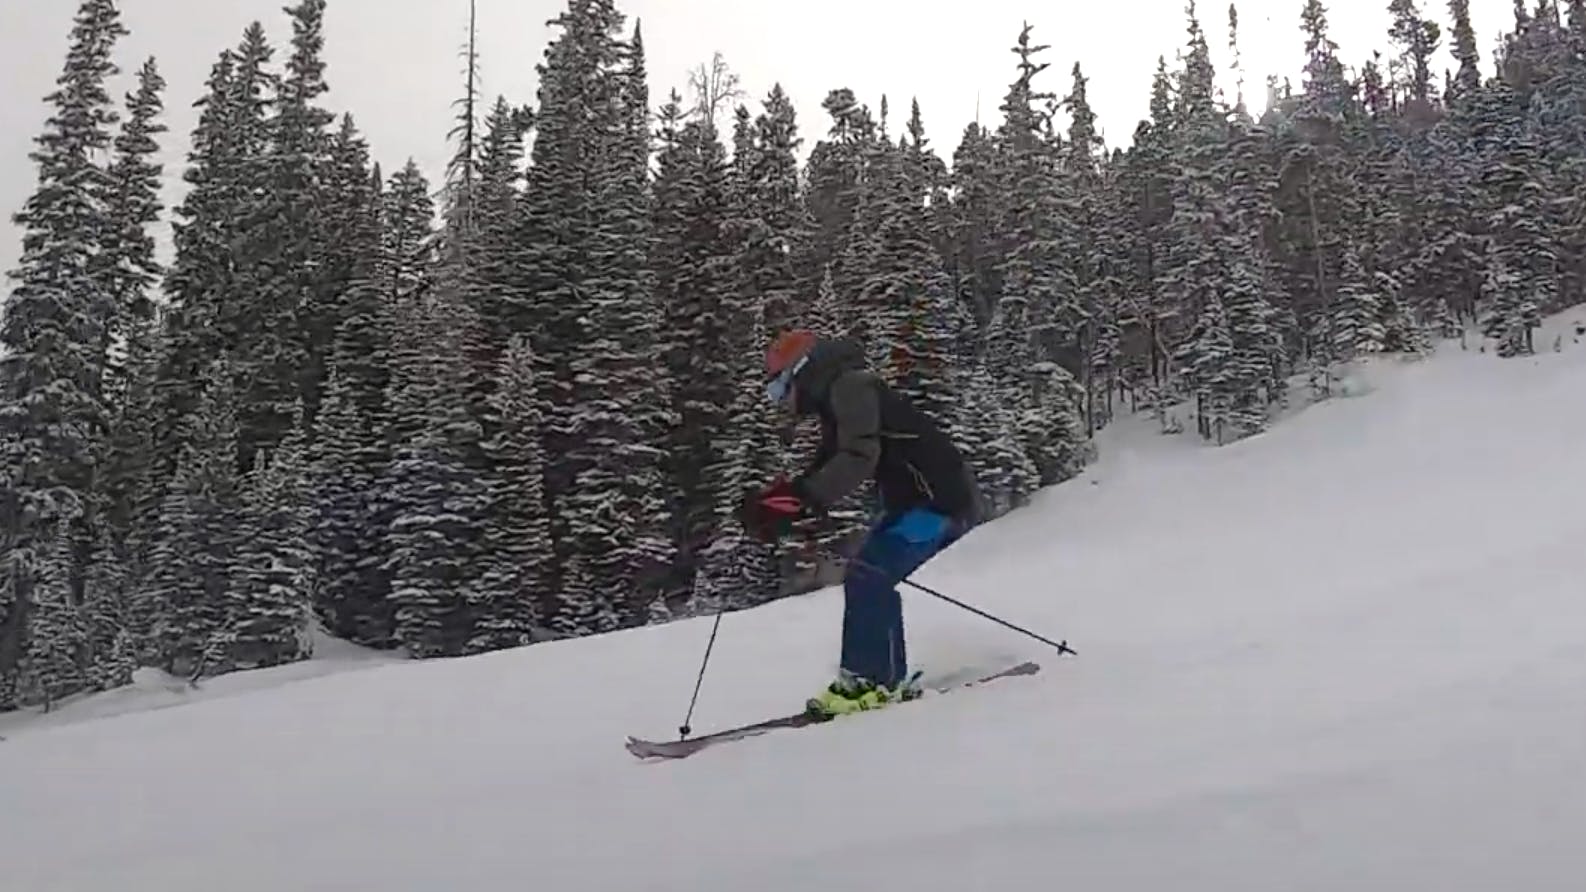 A man in blue pants skis down a mountain